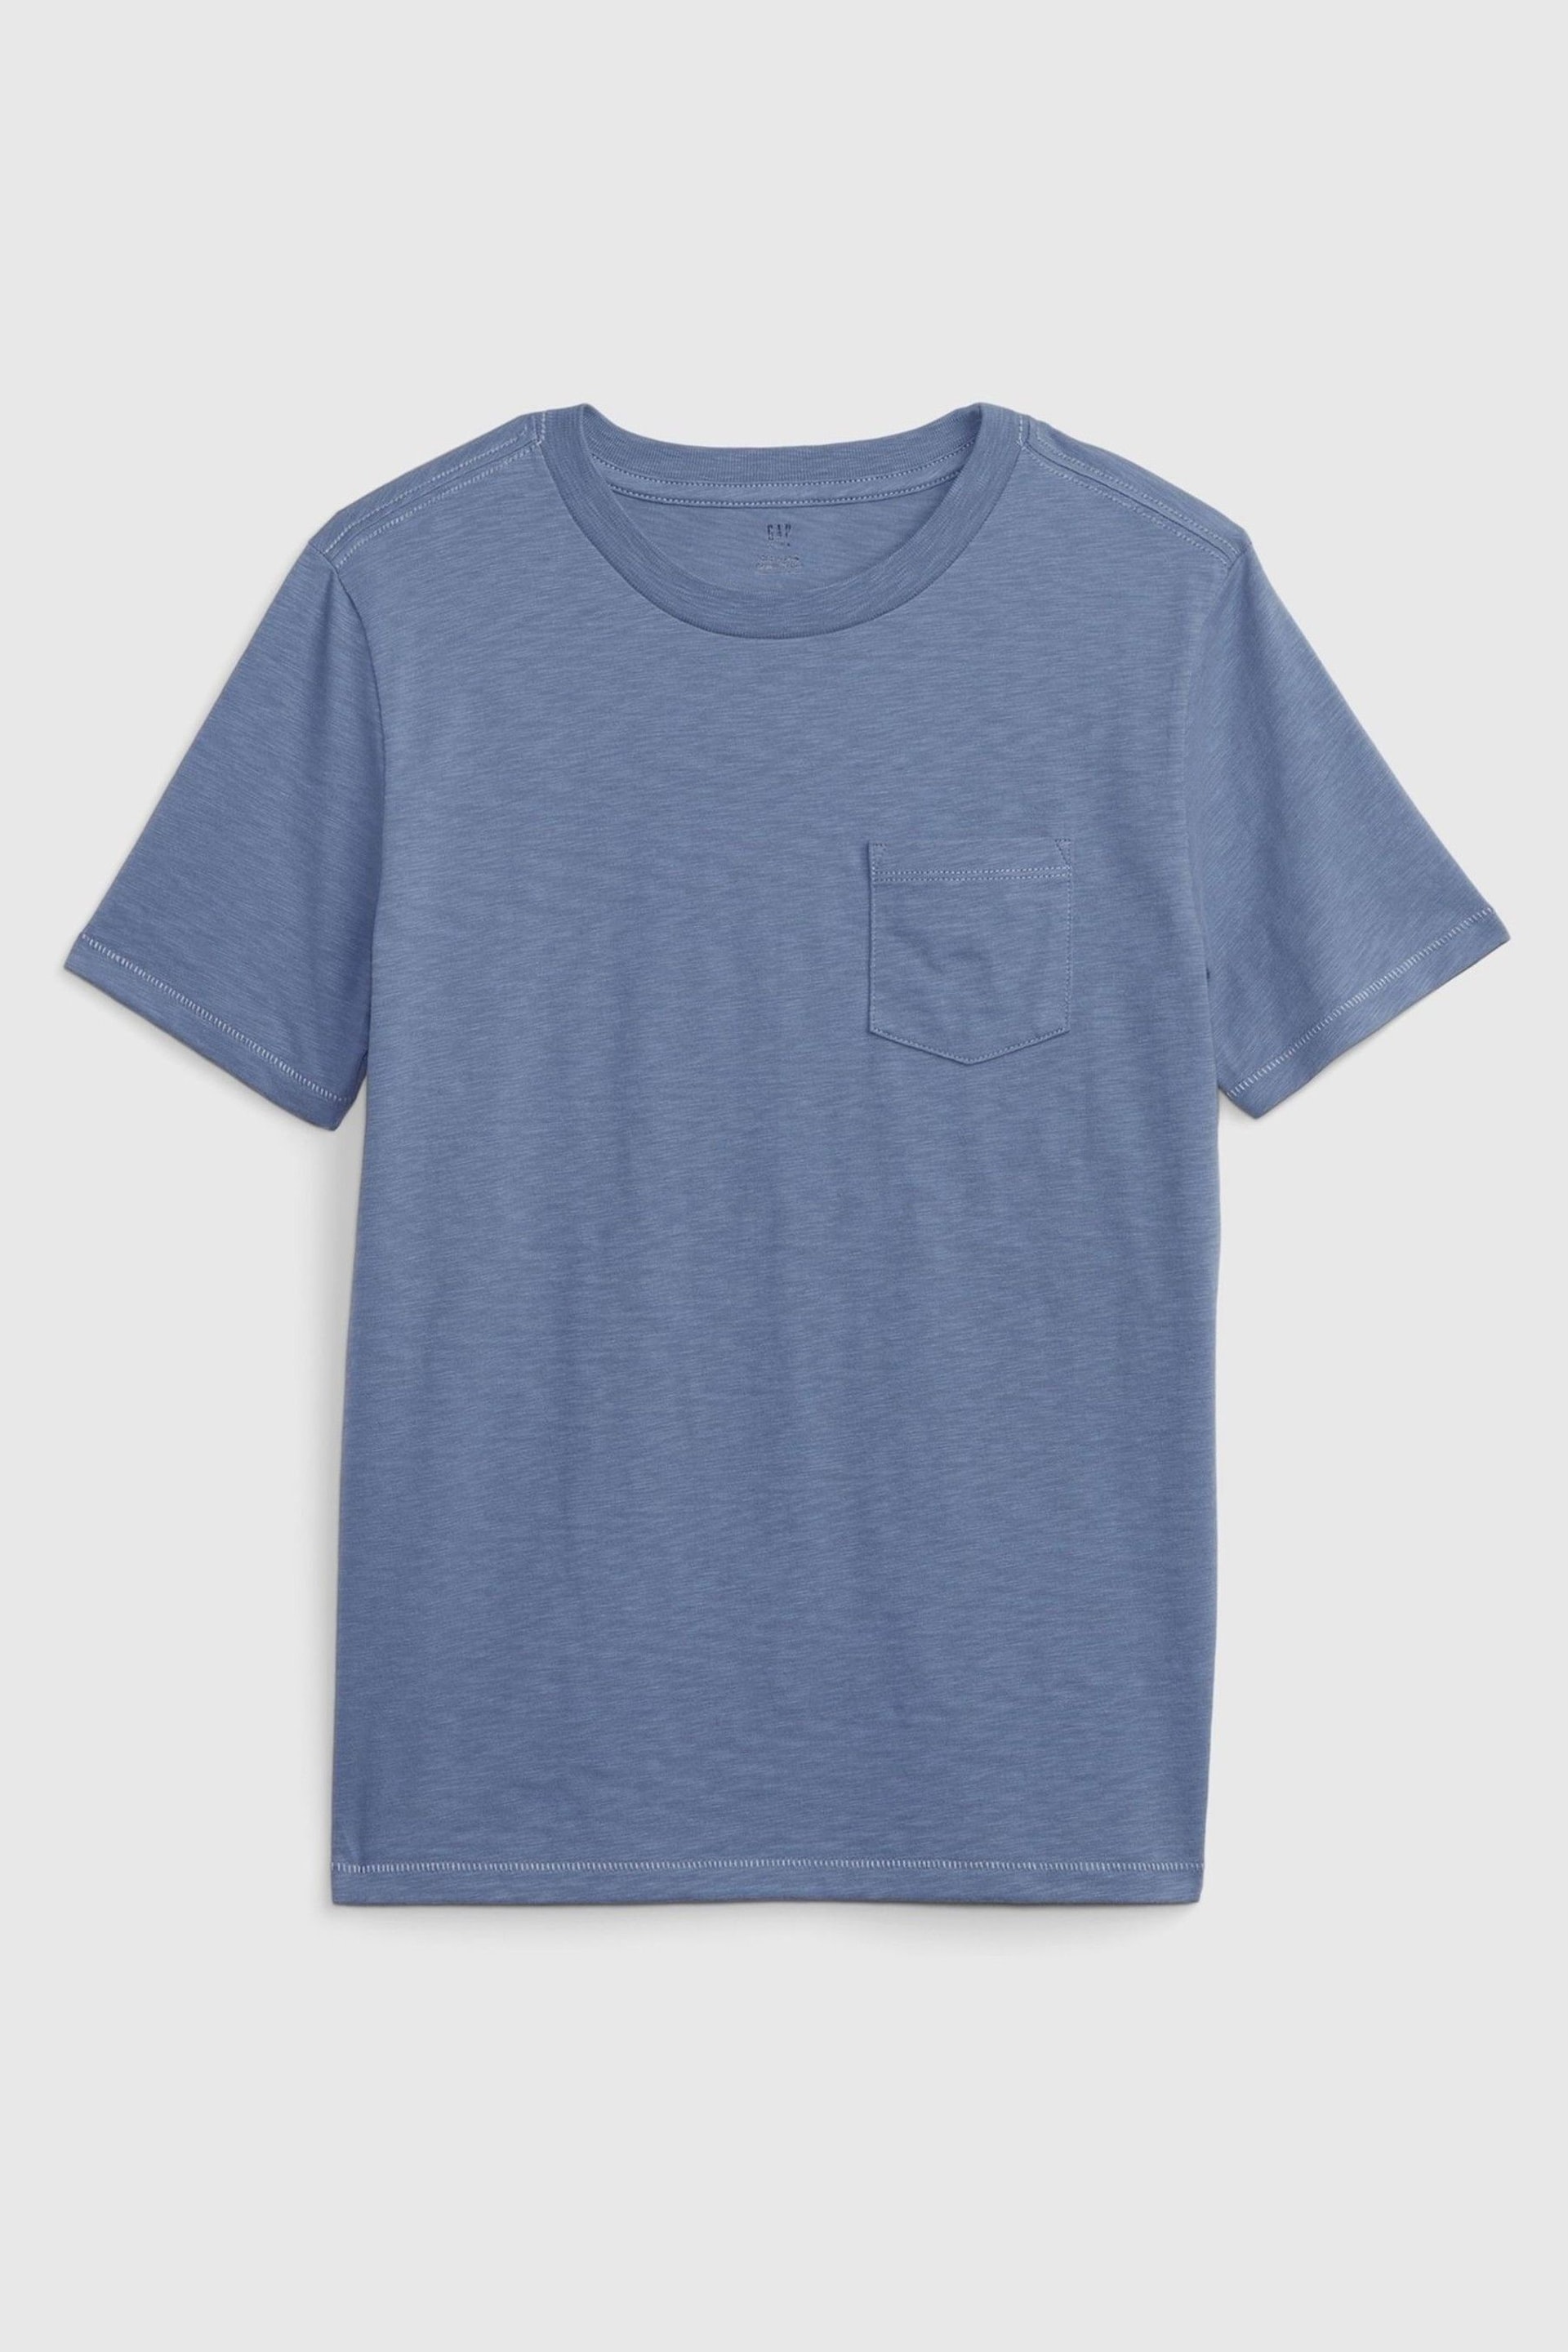 Gap Blue Organic Cotton Pocket Short Sleeve Crew Neck T-Shirt (4-13yrs) - Image 1 of 1